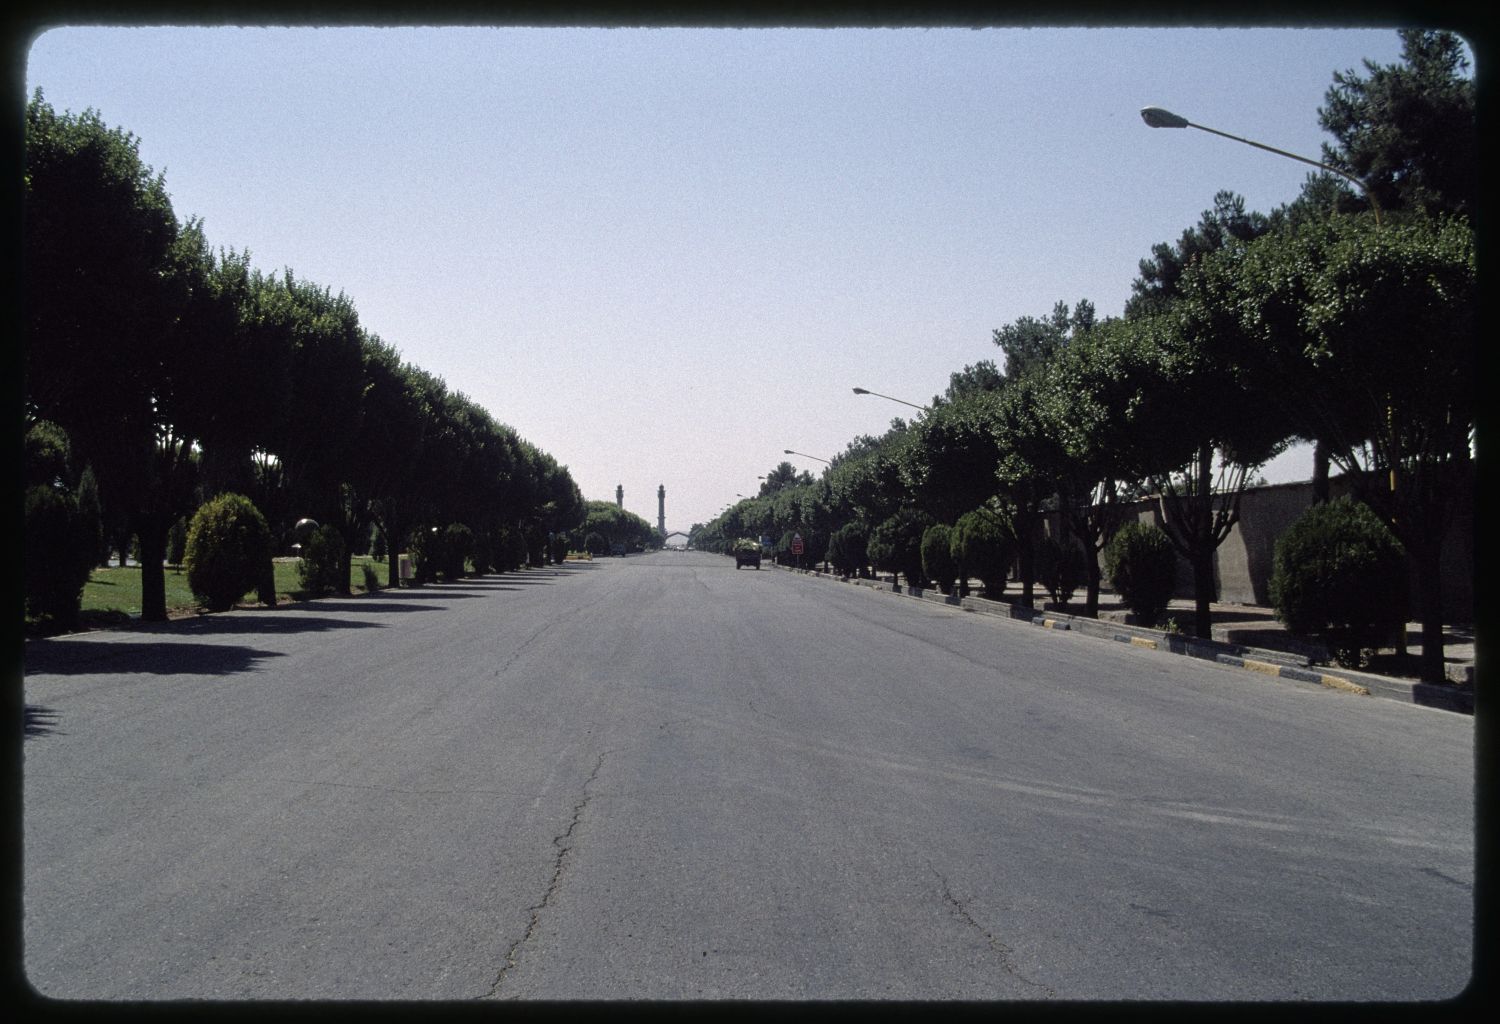 Bihisht-i Zahra - View along road, facing west.